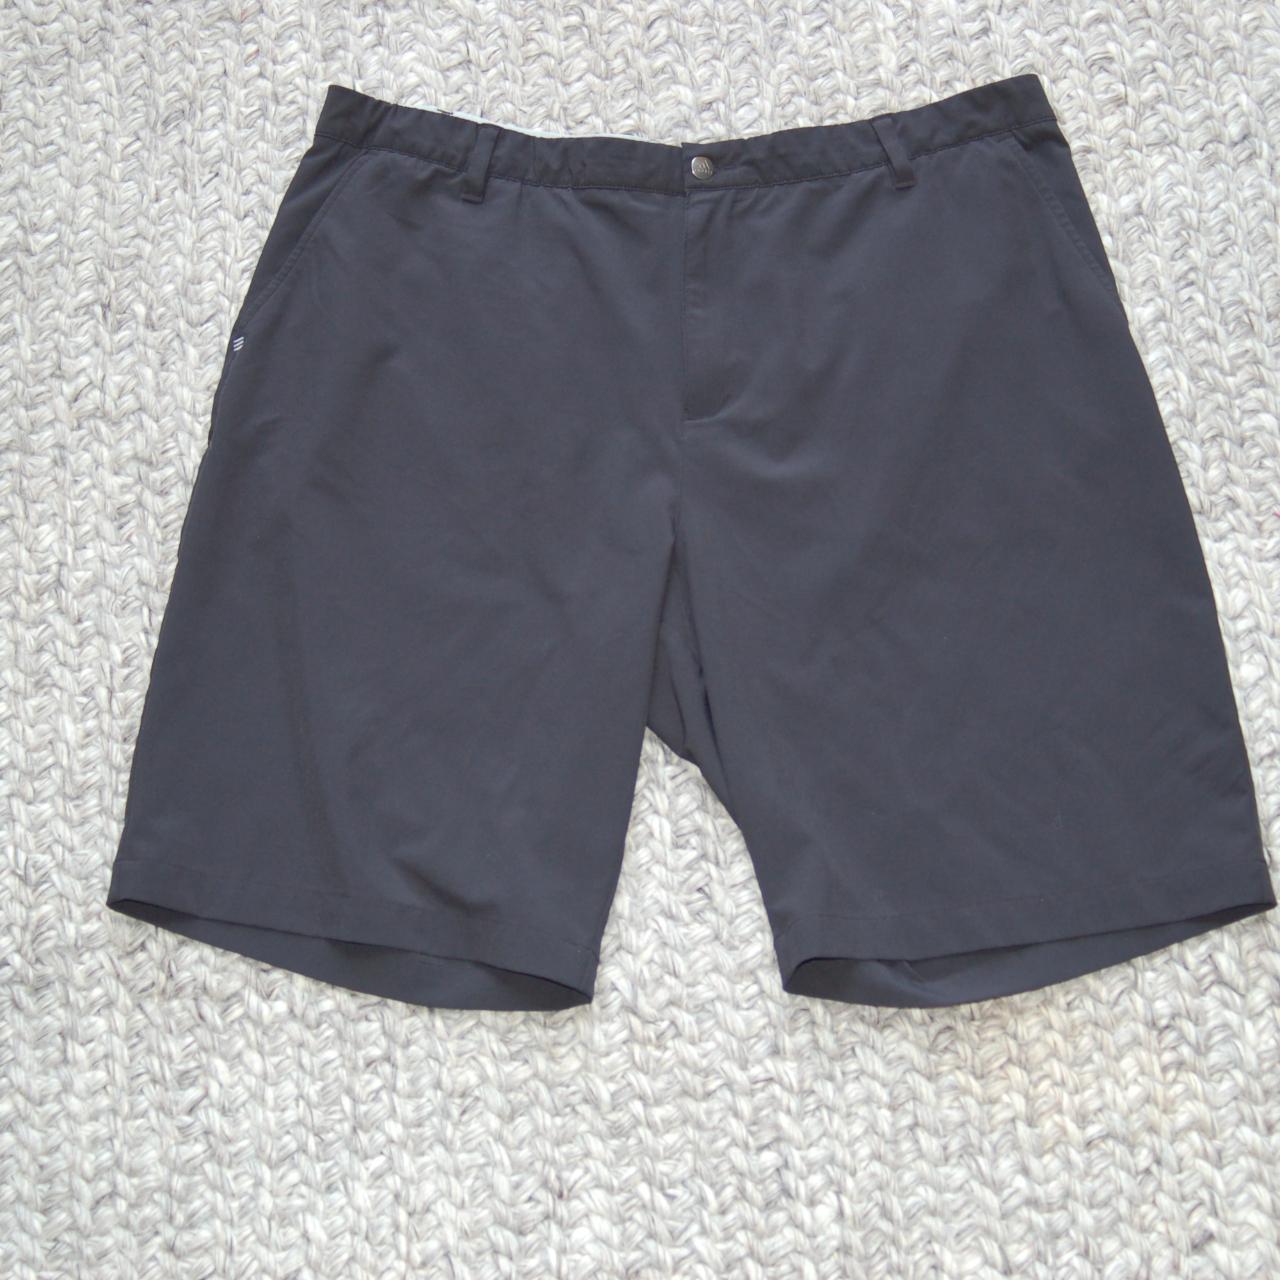 Adidas stretch golf shorts - flat front - Lightly Used - Depop